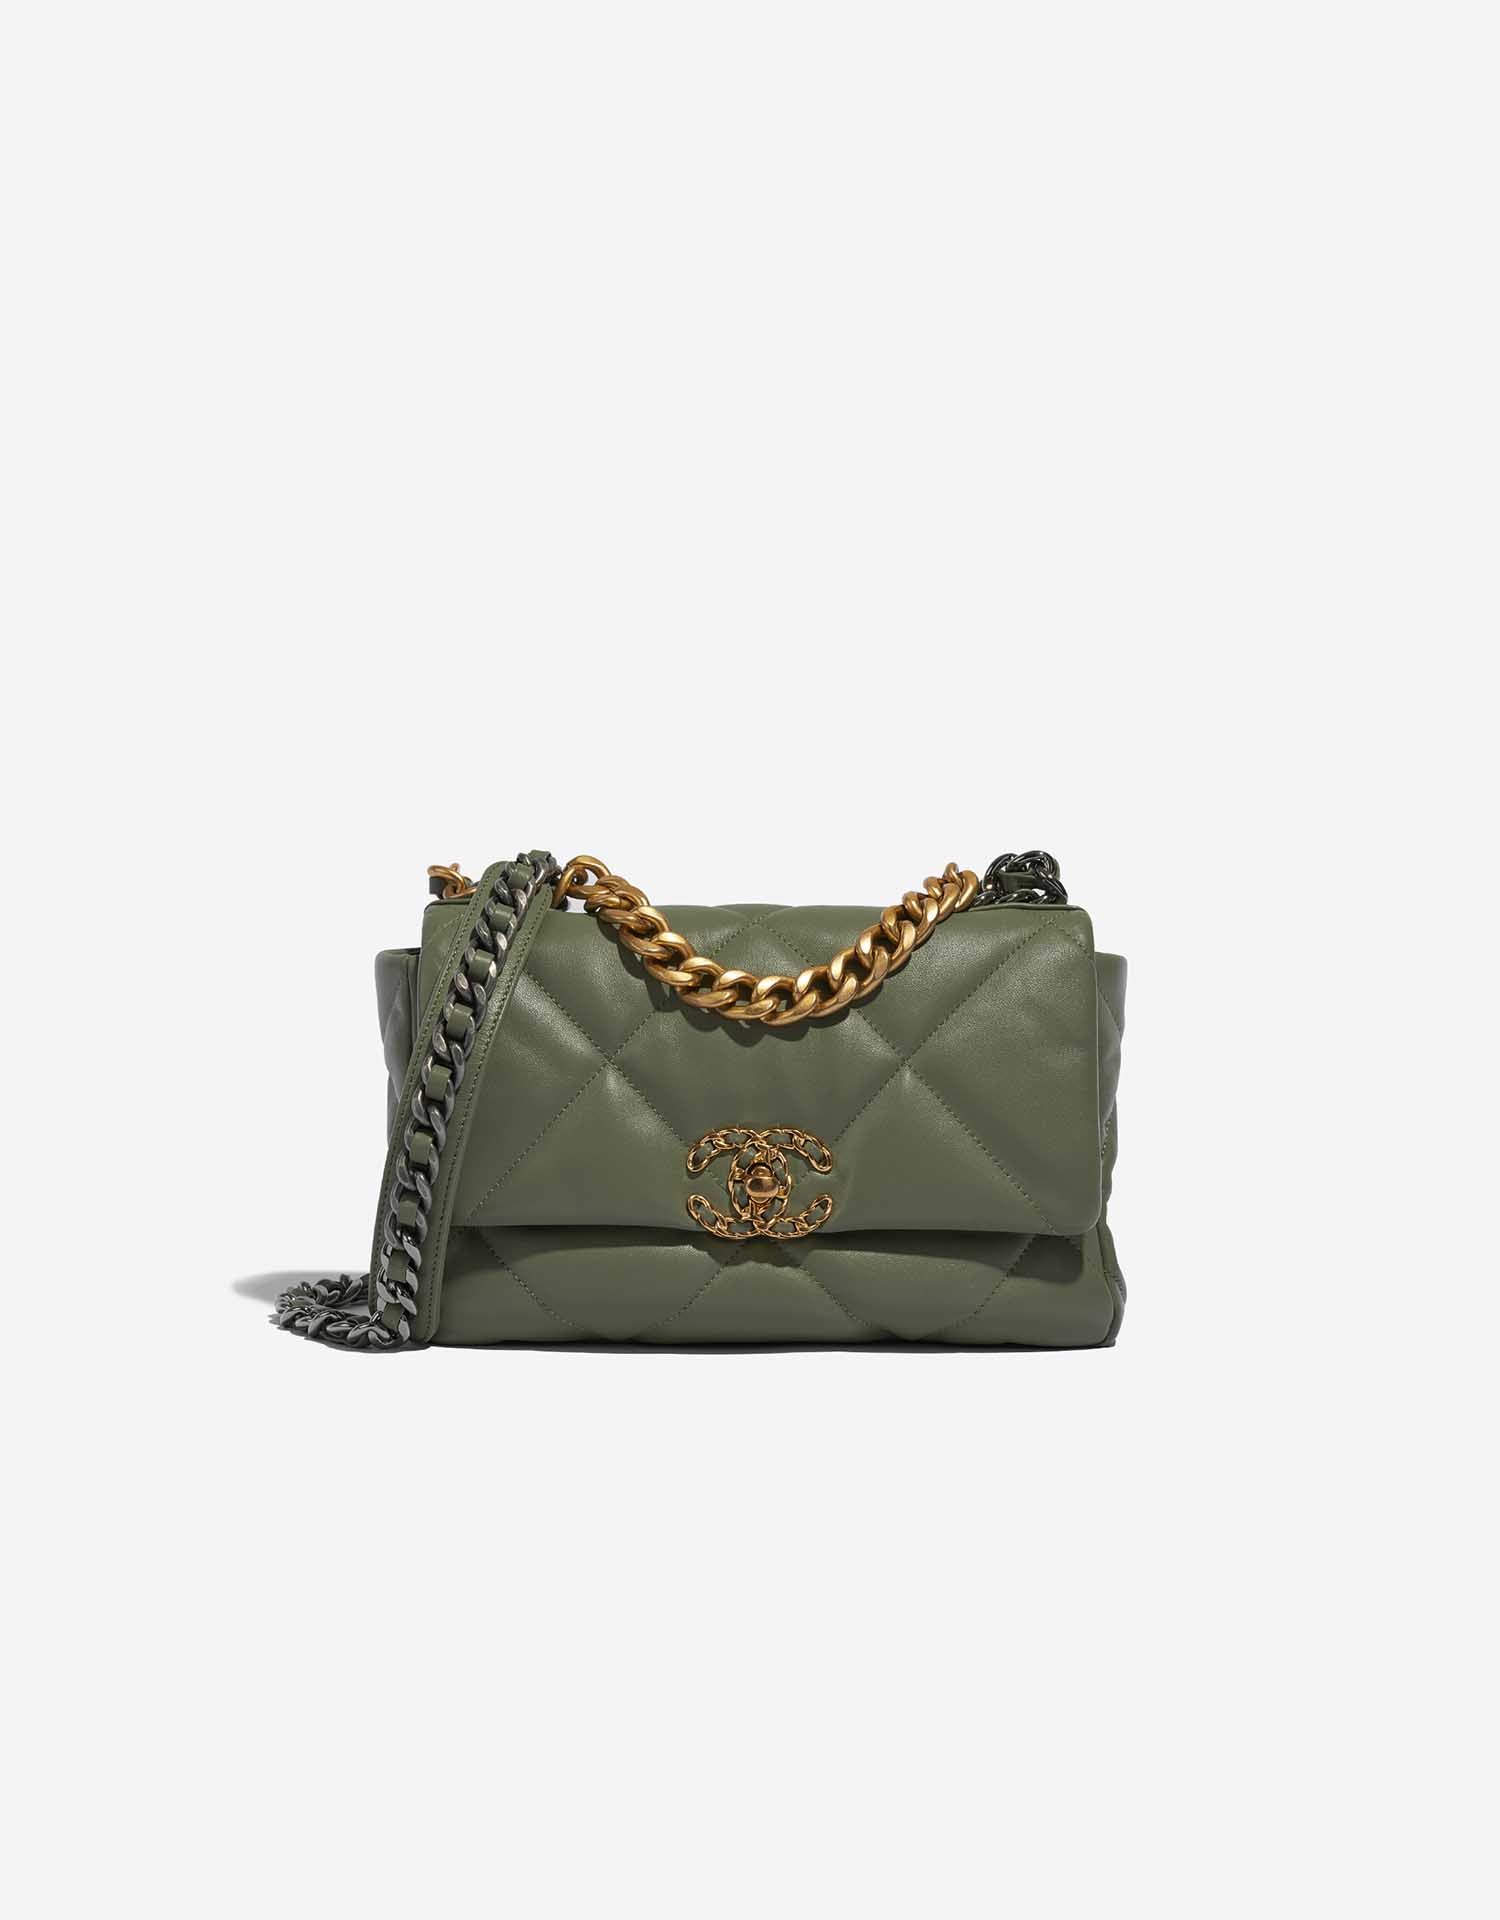 Chanel 19 in green NEW!! Please DM - Luxe luxury labels